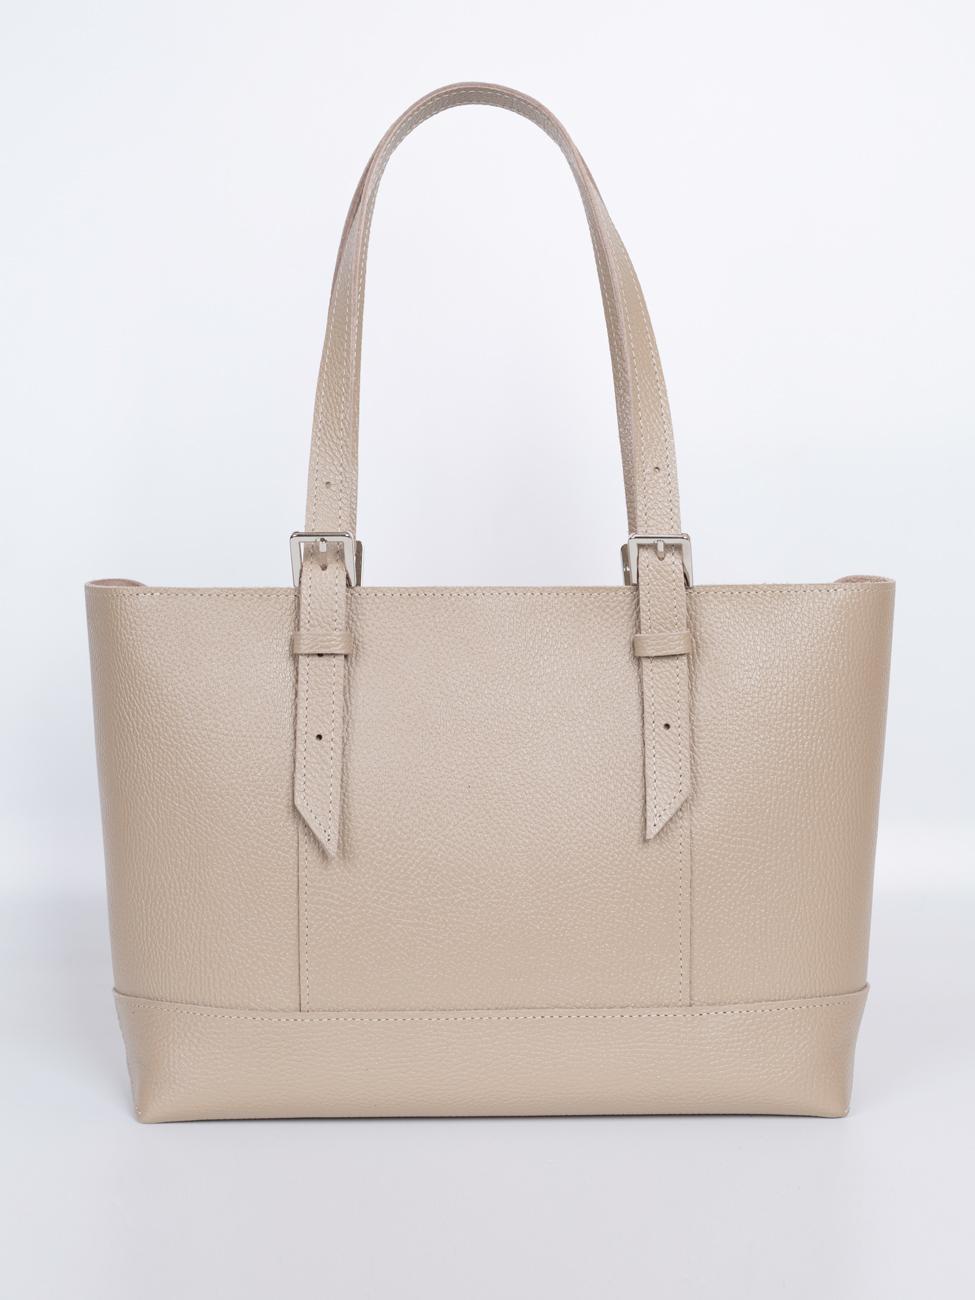 Женская кожаная сумка-шоппер бежевая A032 beige grain